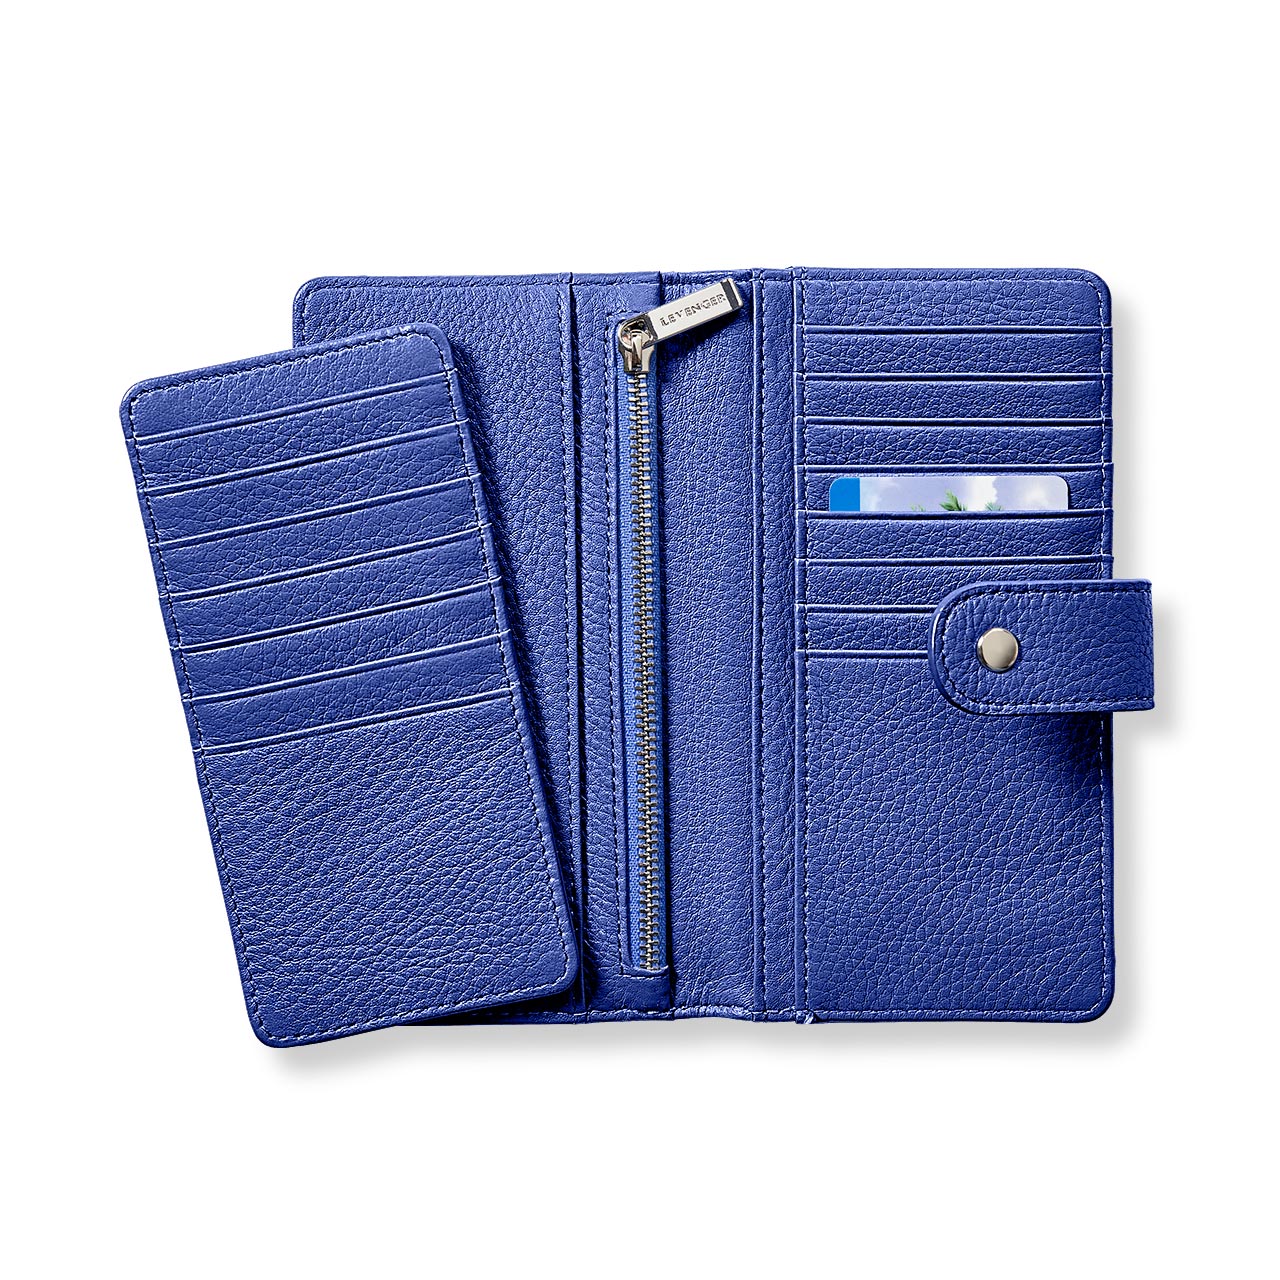 Levenger Card Wallet - Navy, Blue